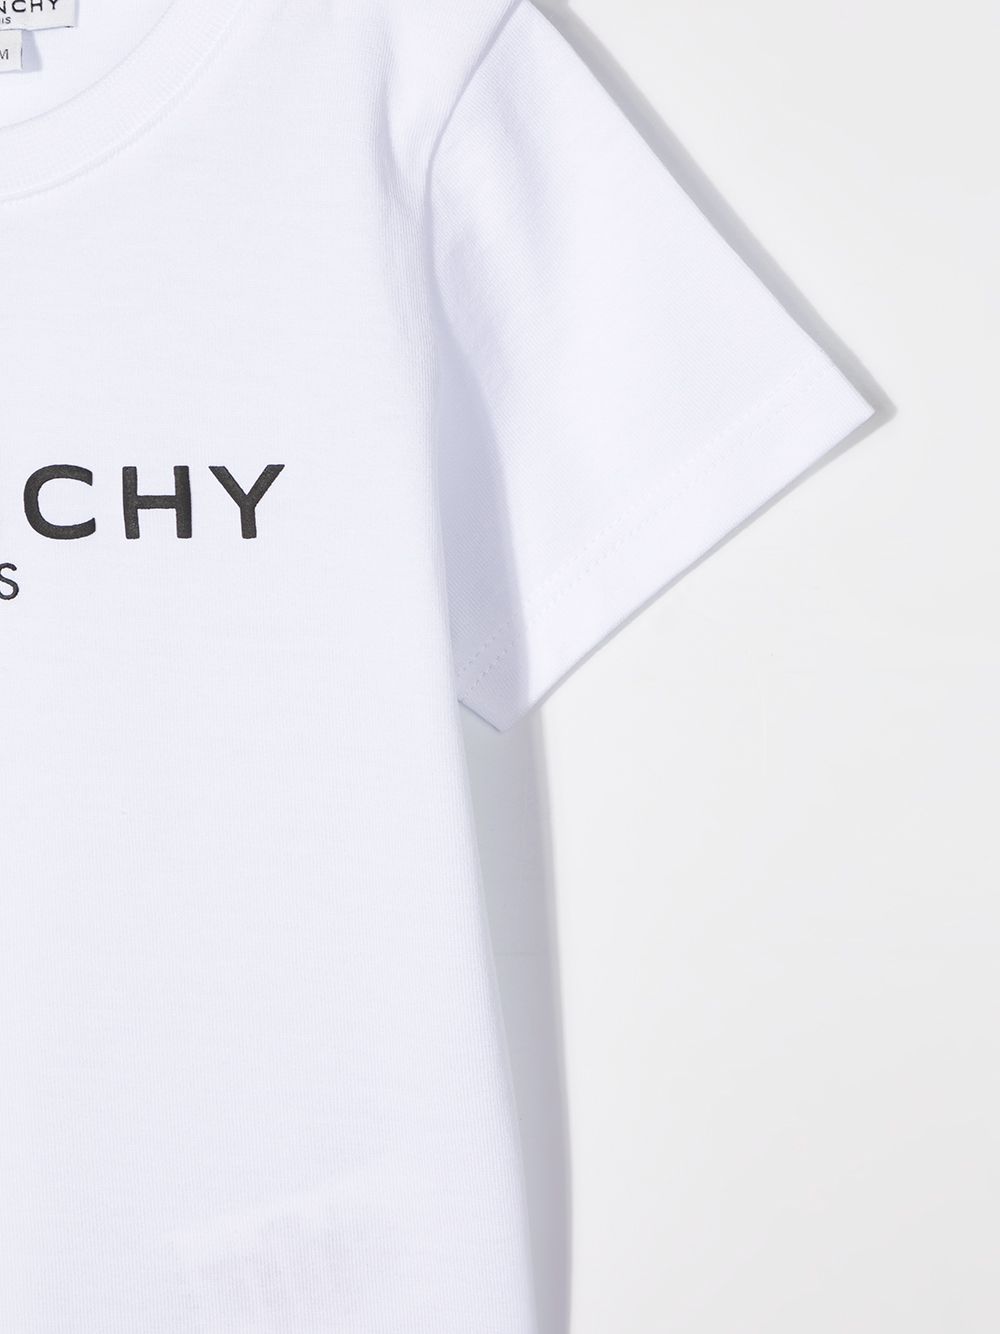 фото Givenchy kids футболка с логотипом